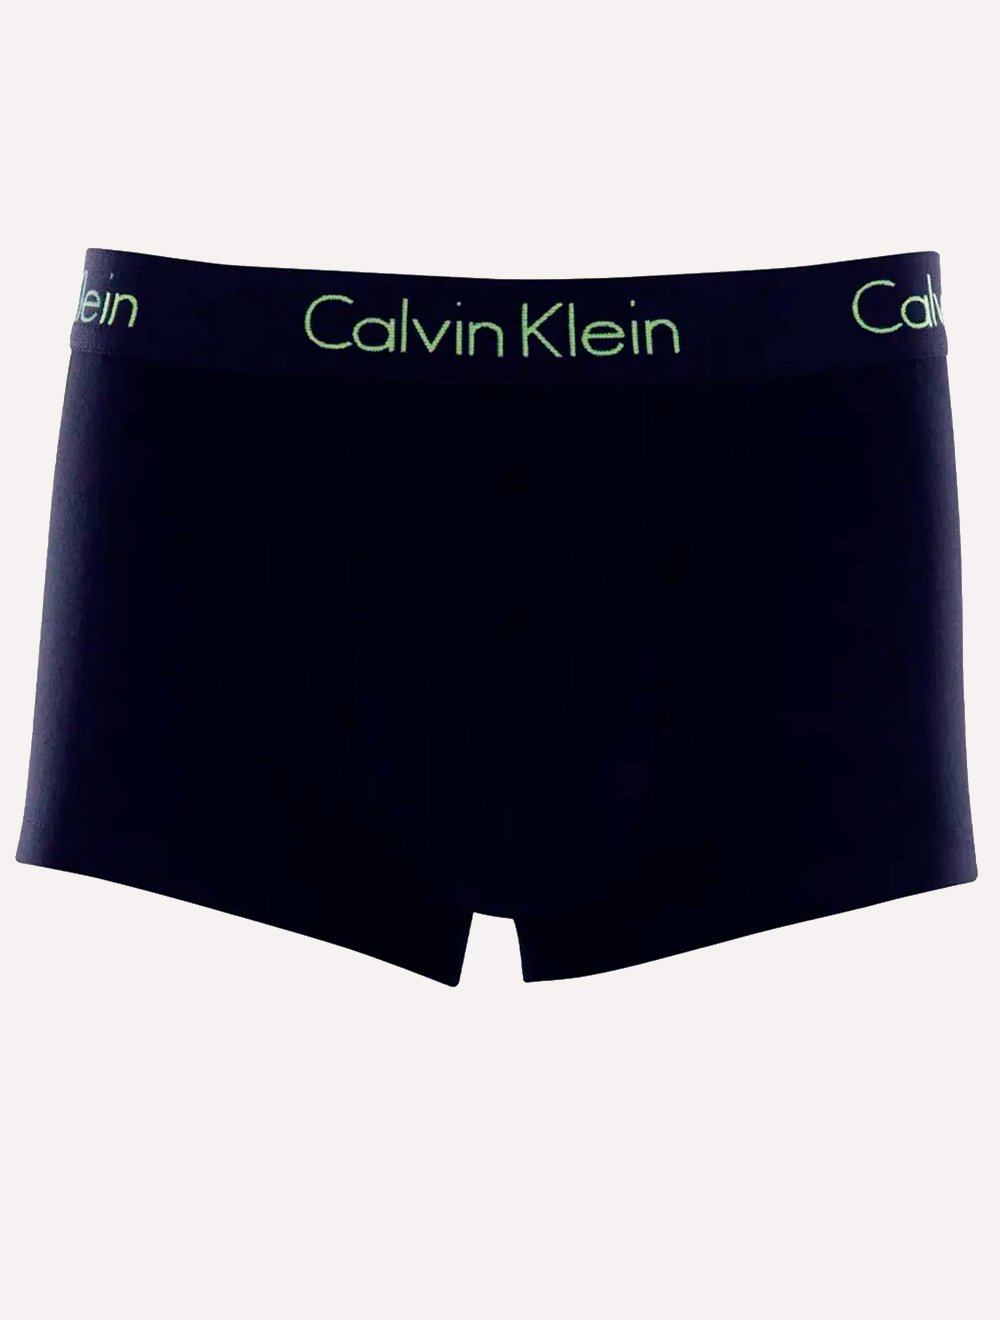 Cueca Calvin Klein Low Rise Trunk Green Azul Marinho C12.01 AZ08 1UN